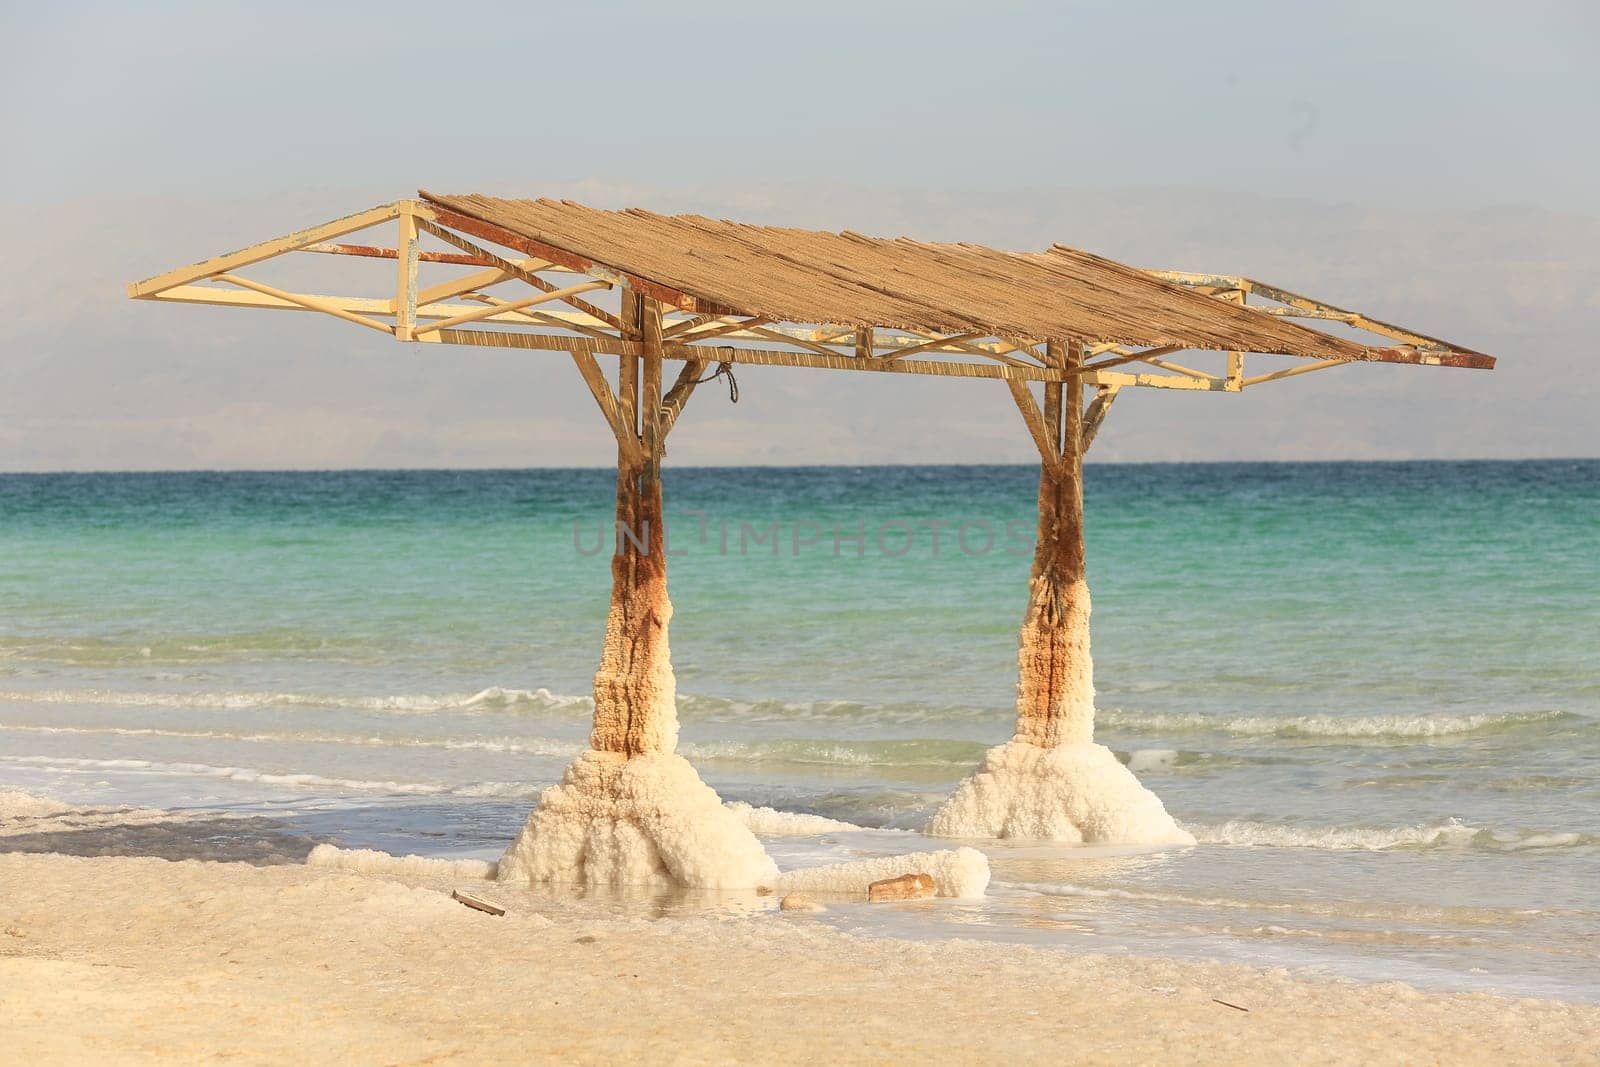 The Dead Sea has a lot of salt. High quality photo